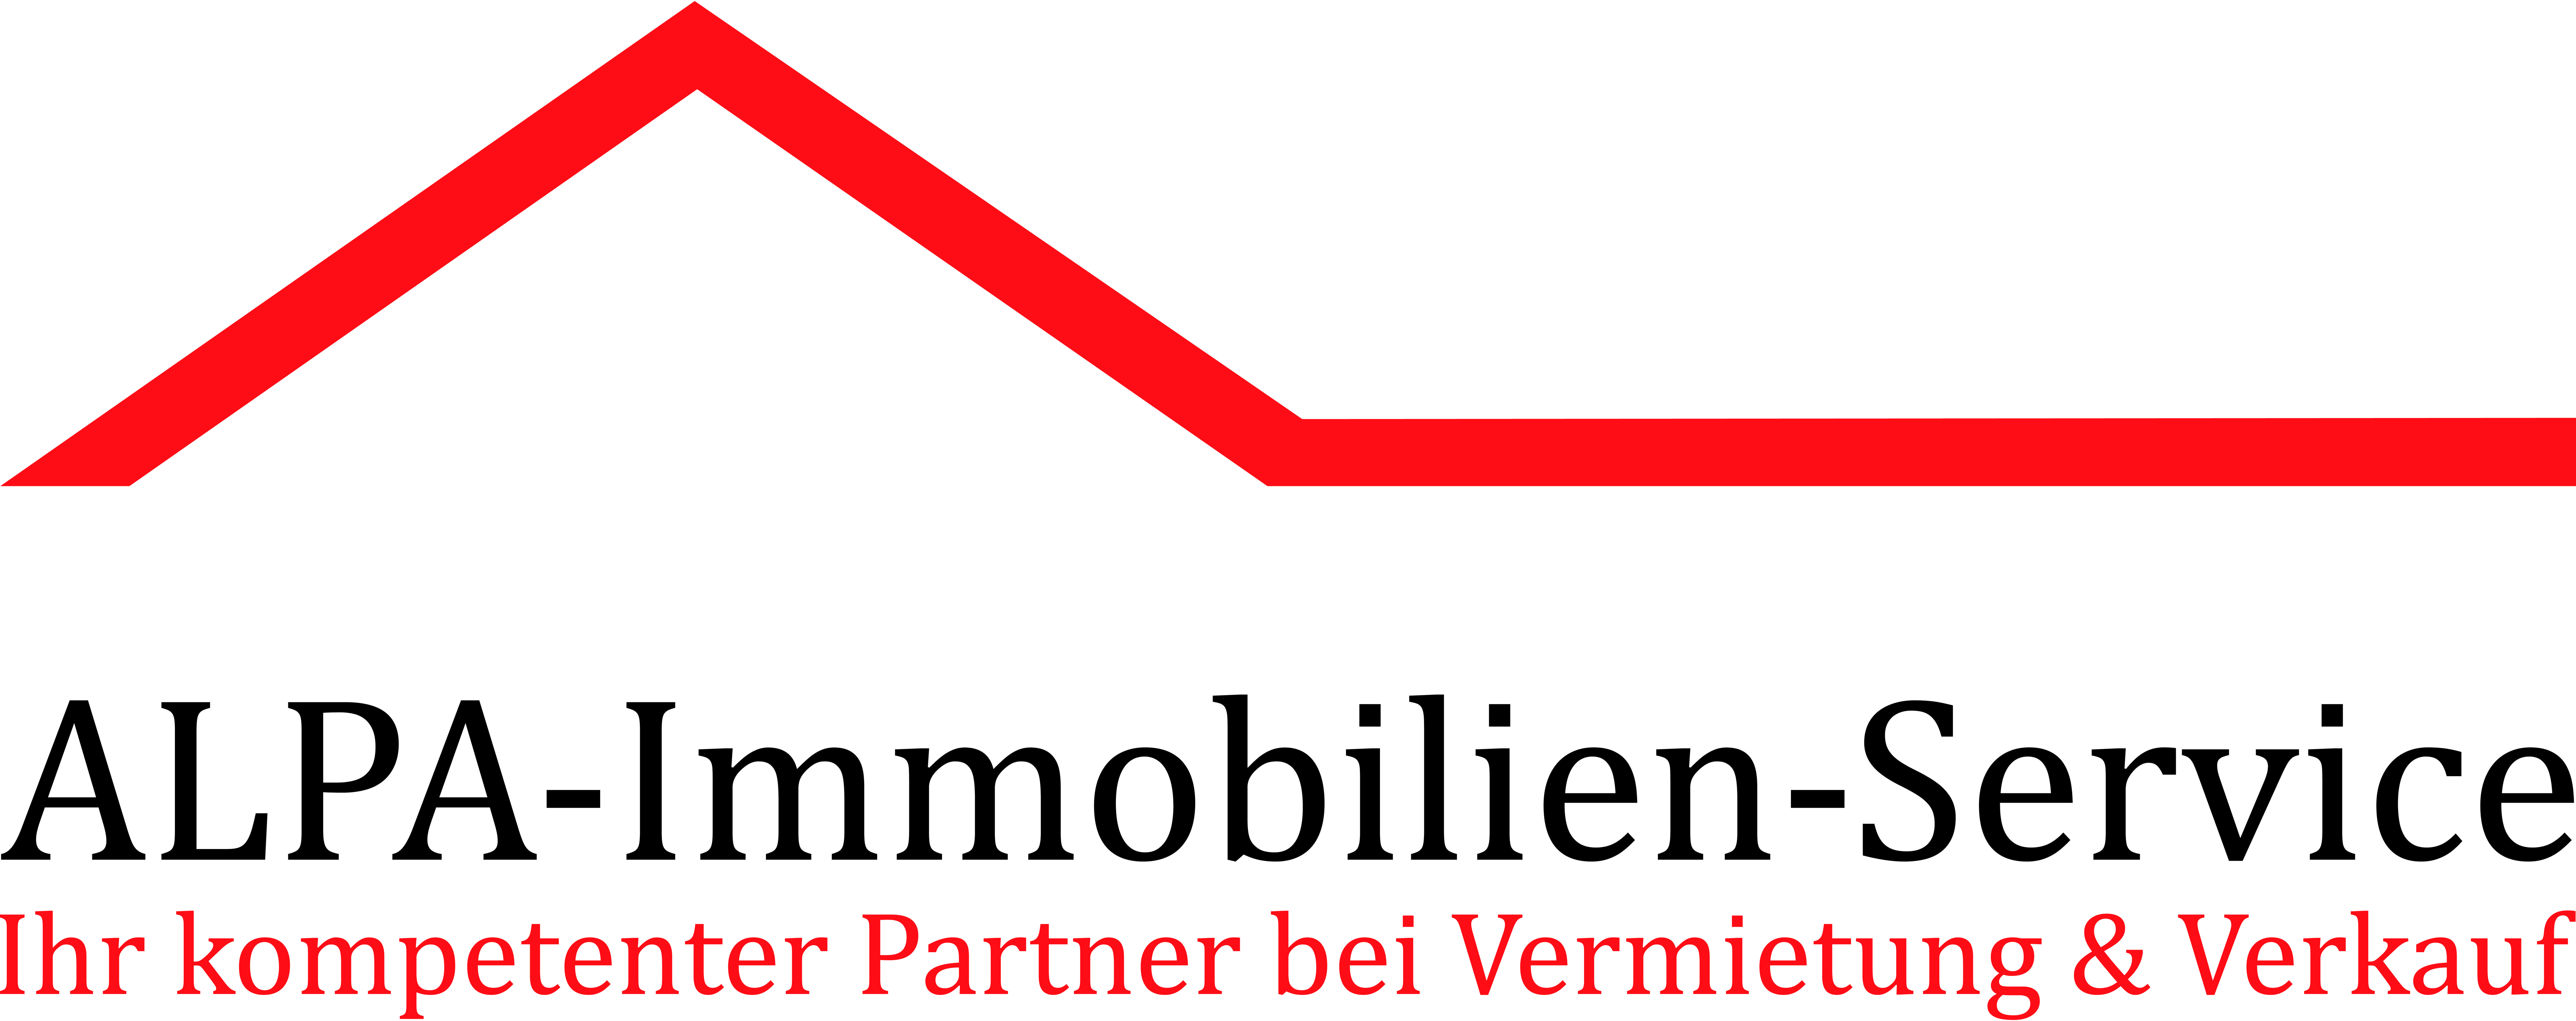 ALPA Immobilien Service Logo